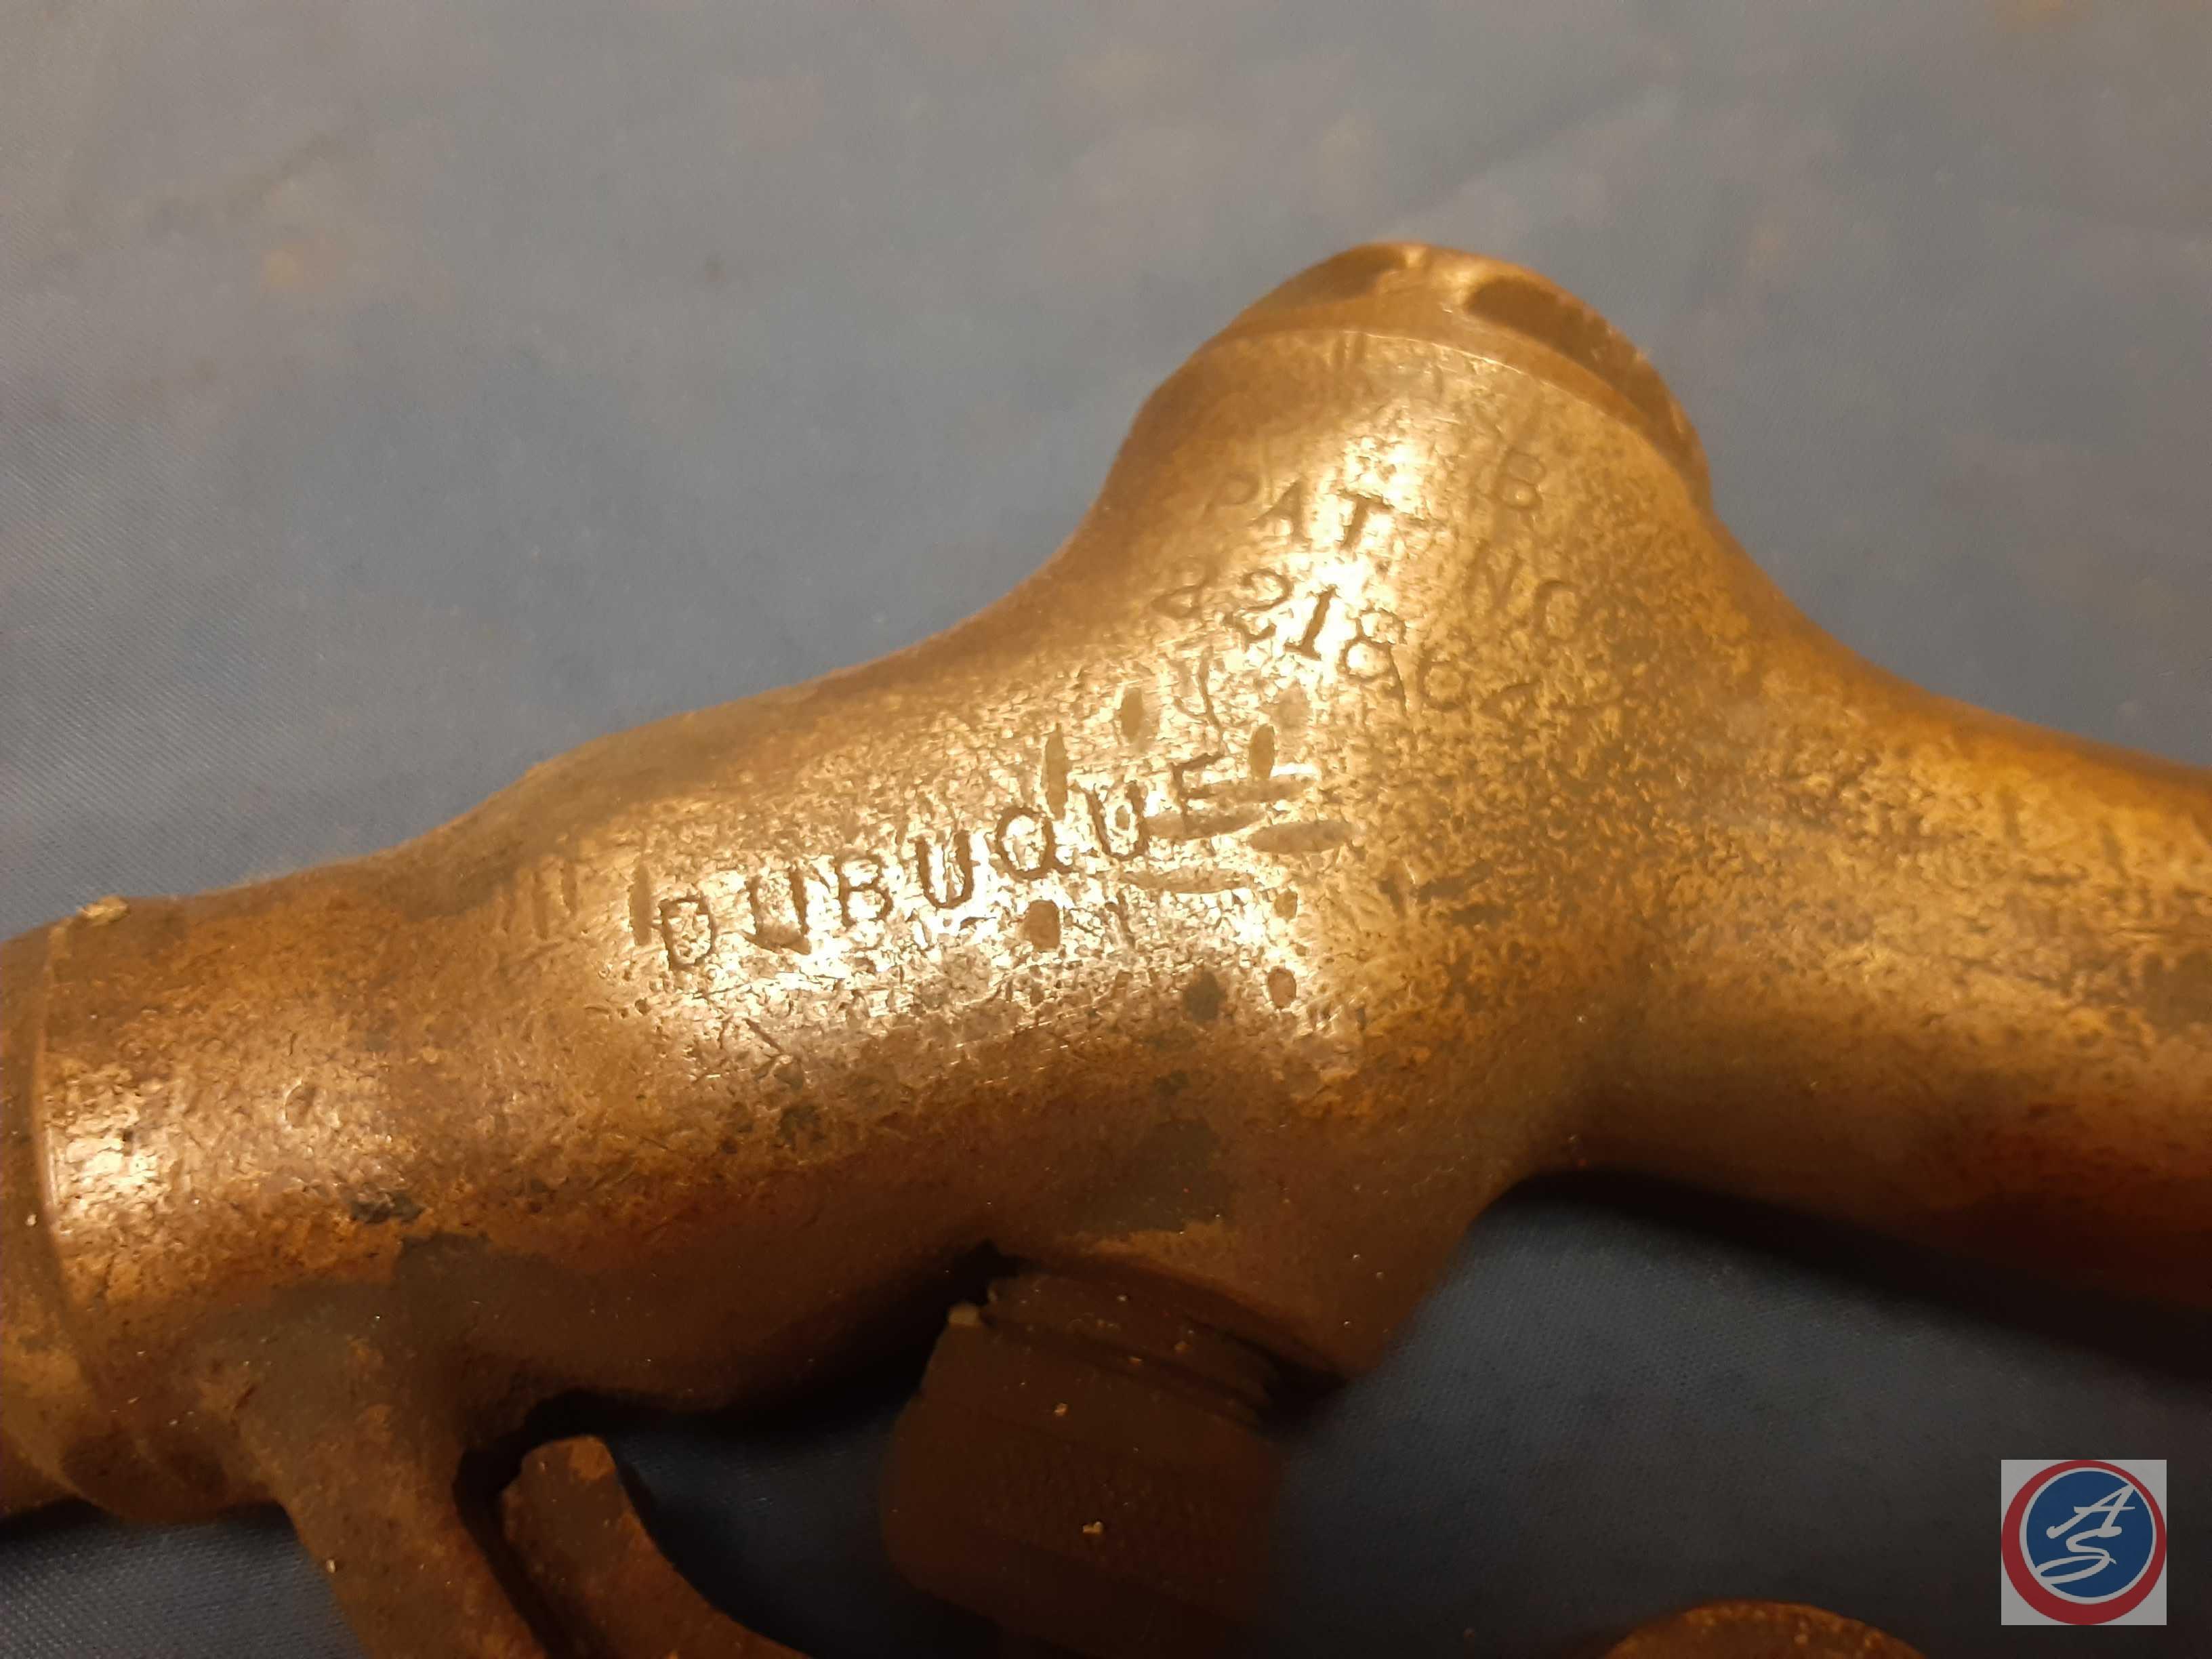 Buckeye Brass Gas Pump Nozzle pat. May 18, 1926, McDonald Brass Gas Pump Nozzle PL.980 3/4 Dubuque